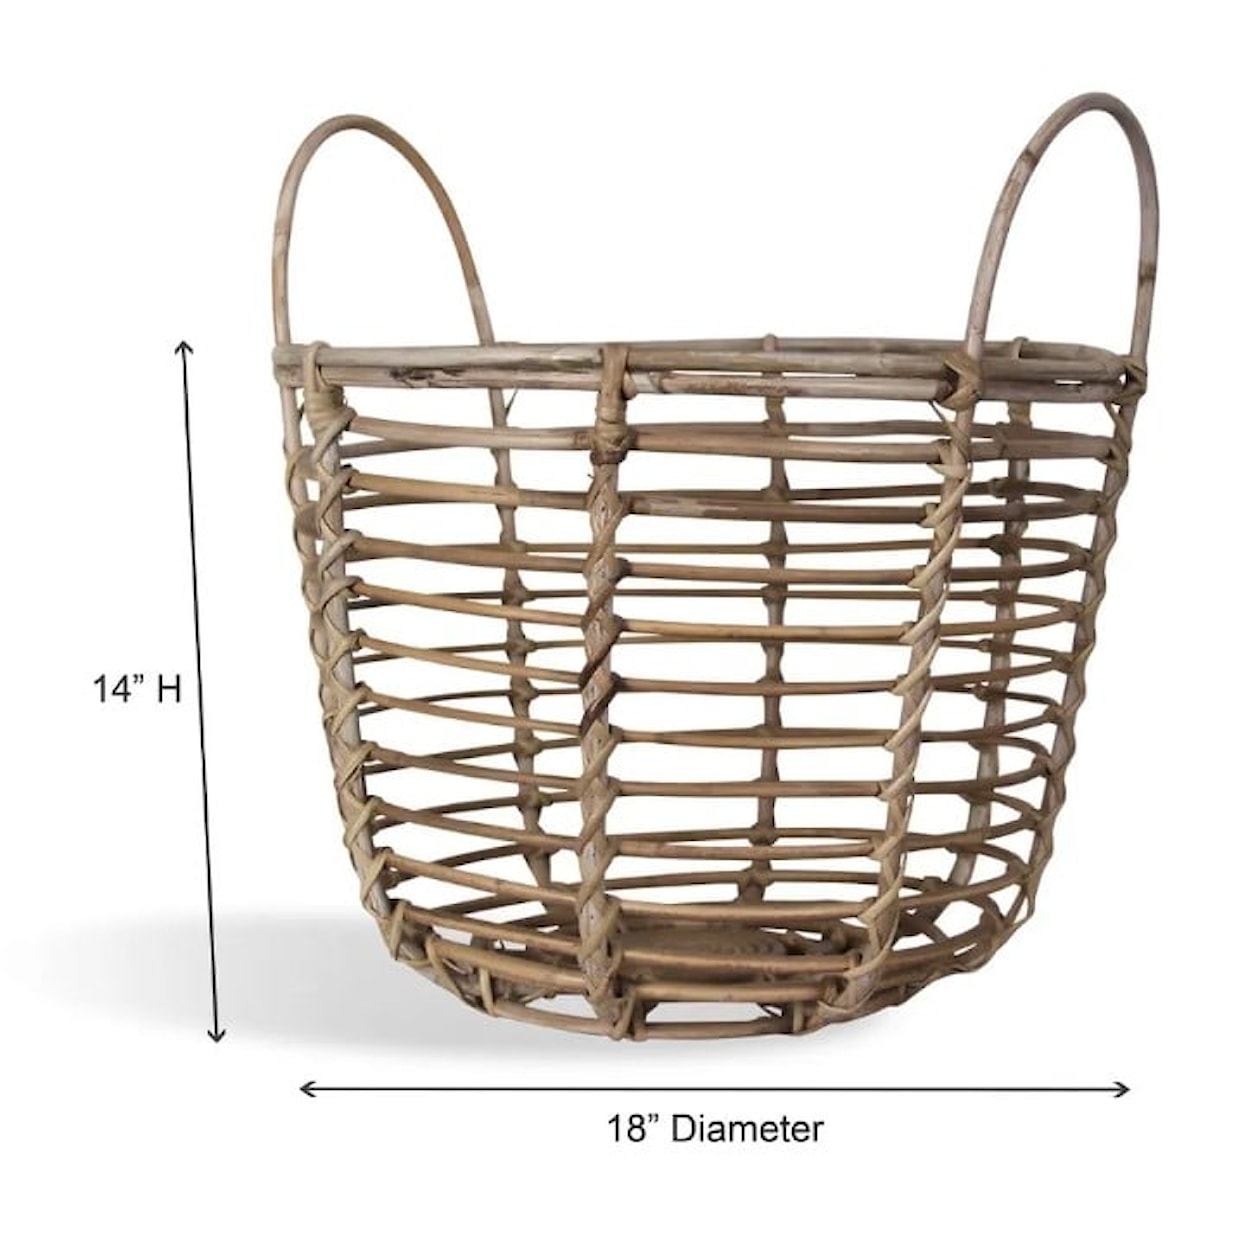 Ibolili Baskets and Sets FRENCH GRAY MORGAN BASKET, ROUND